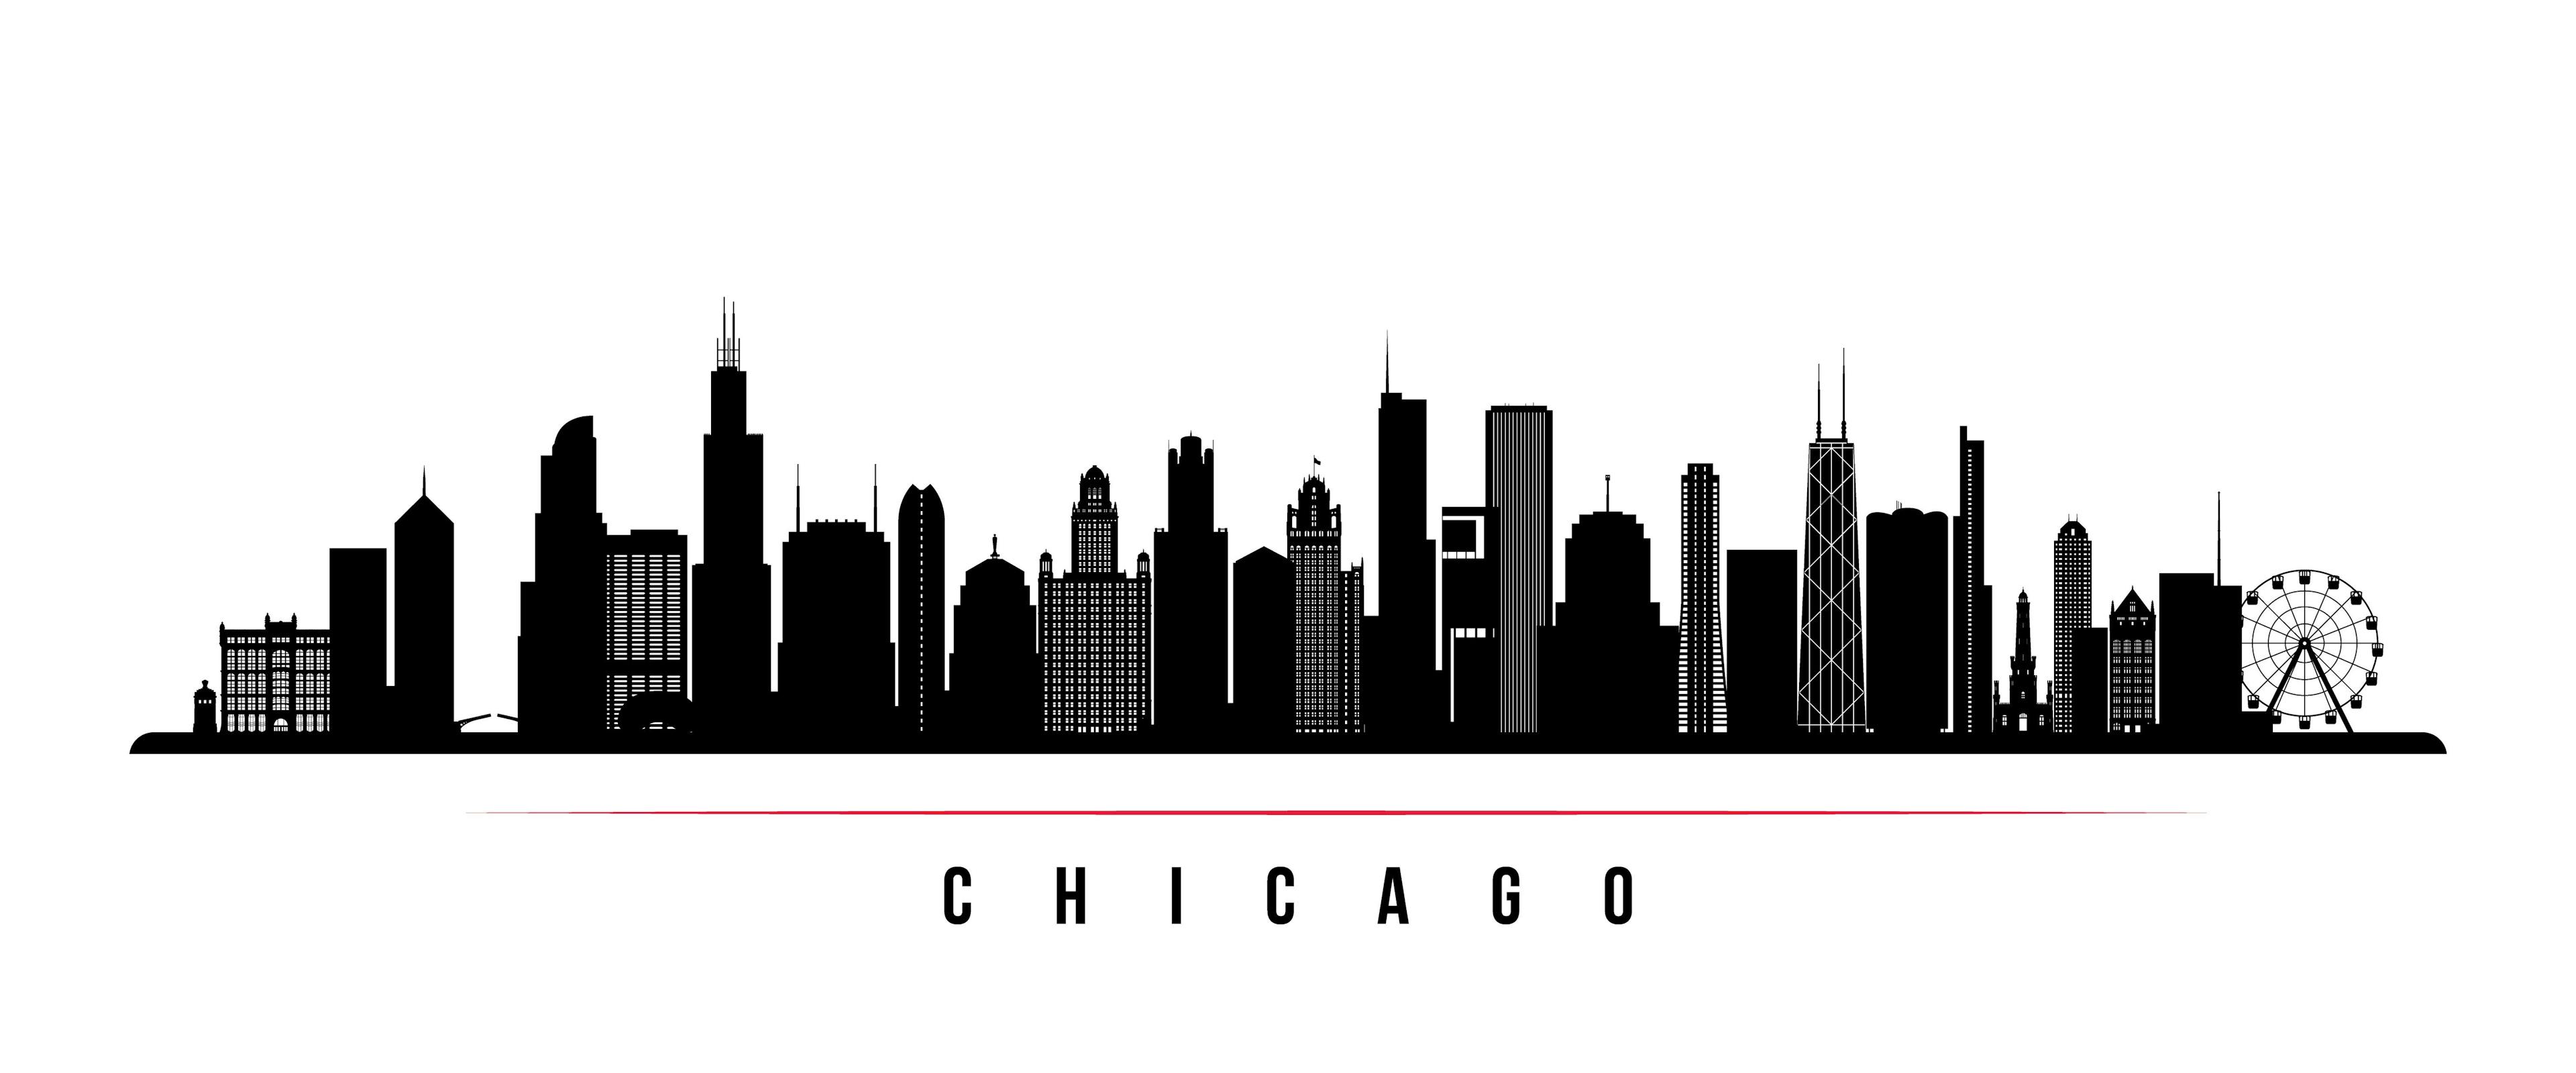 Illustration of Chicago skyline | Image credit: © greens87 stock.adobe.com